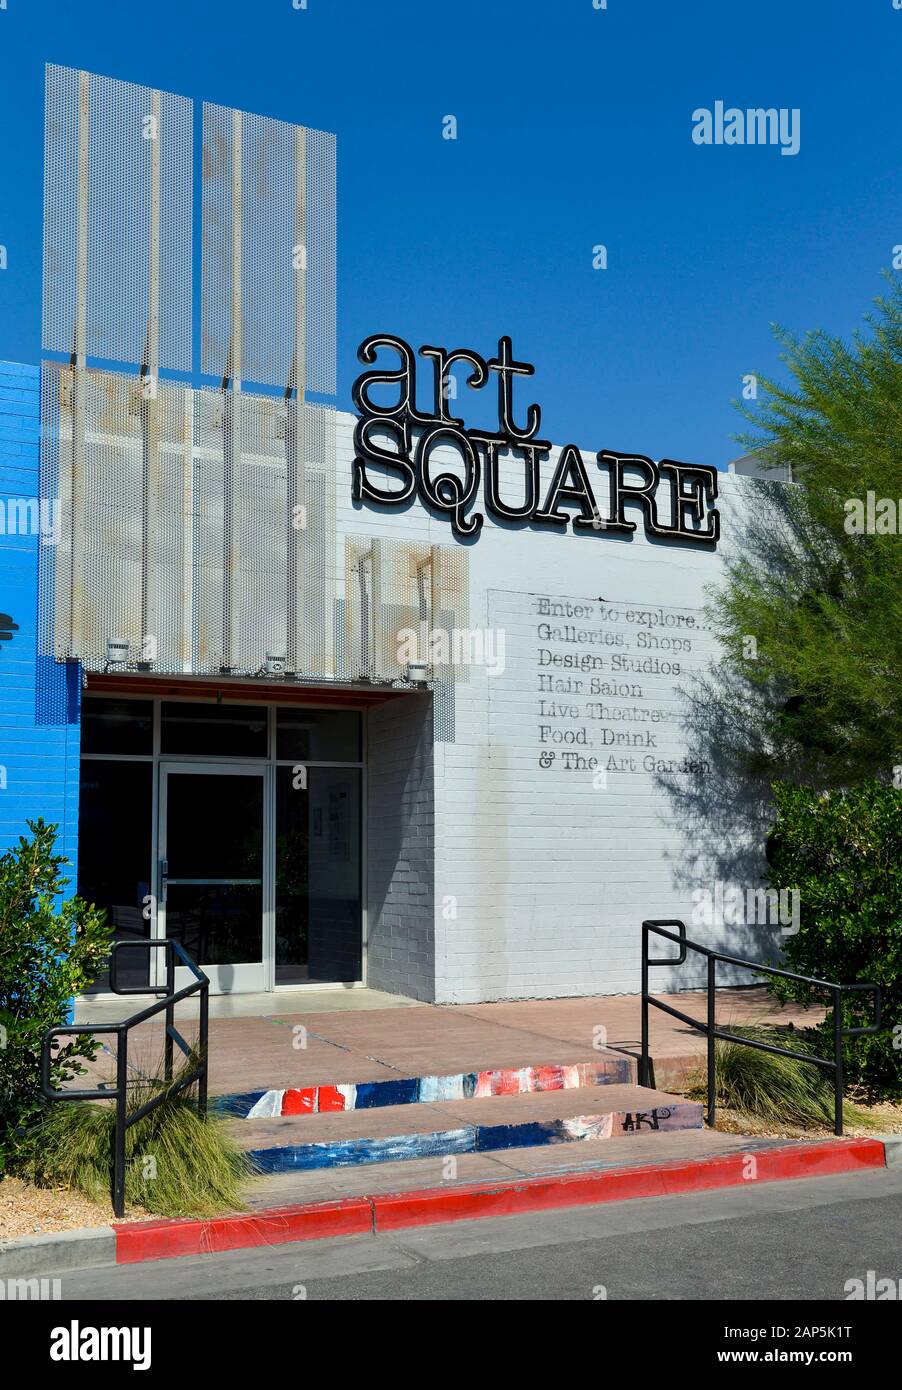 Las Vegas Arts District, Arts Square Stock Photo